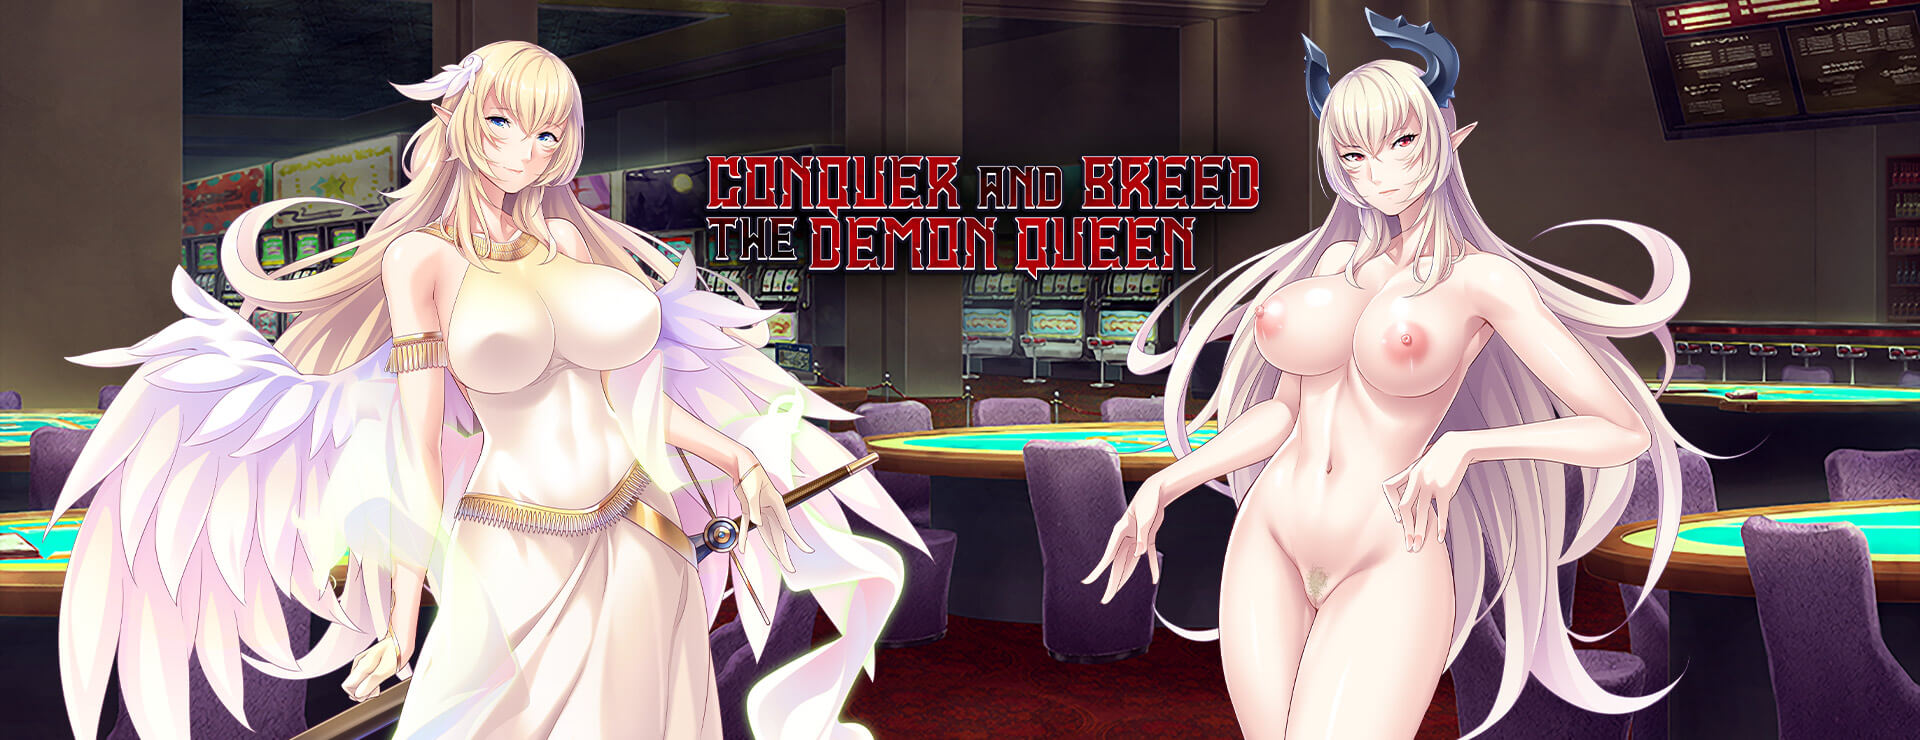 Conquer and Breed the Demon Queen - Novela Visual Juego